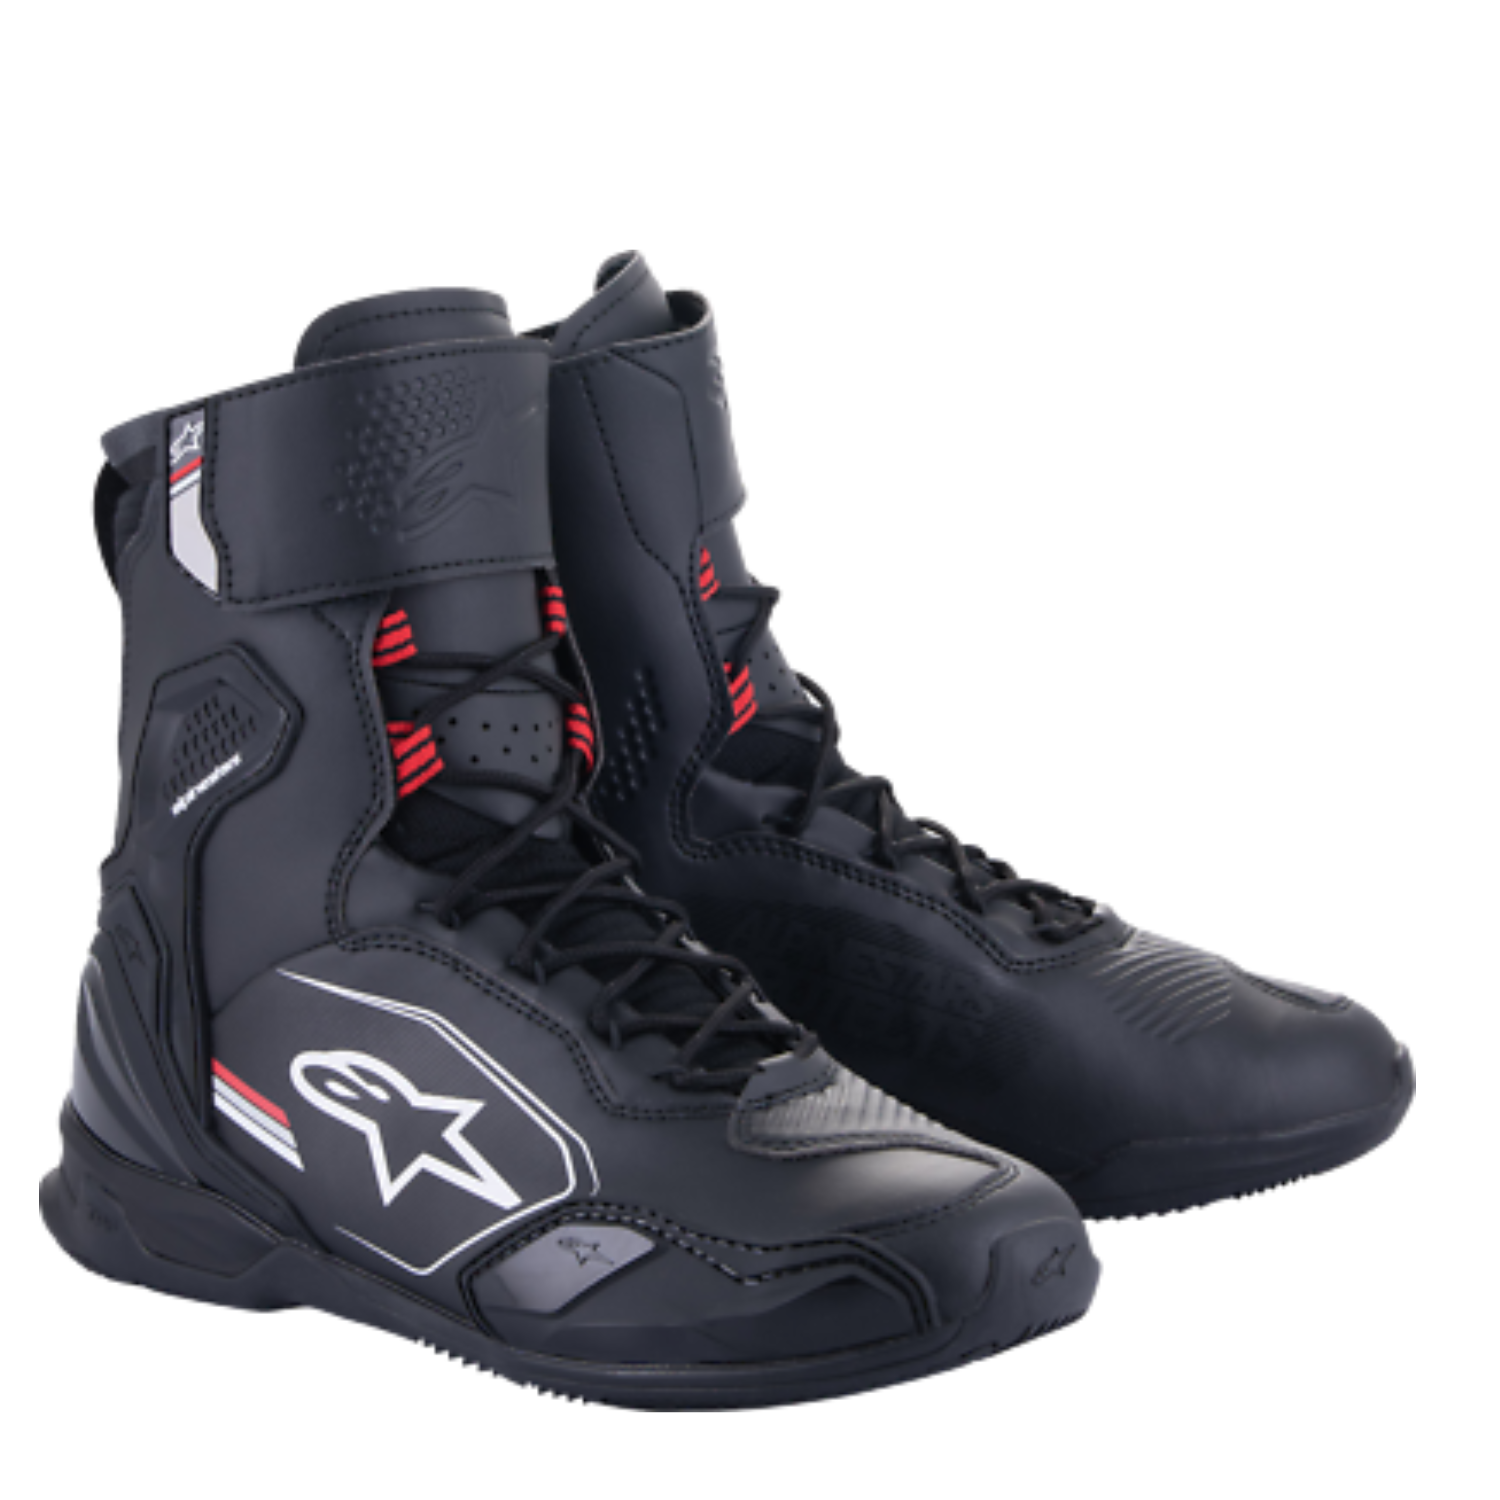 Image of Alpinestars Superfaster Shoes Black Gray Bright Red Größe US 8